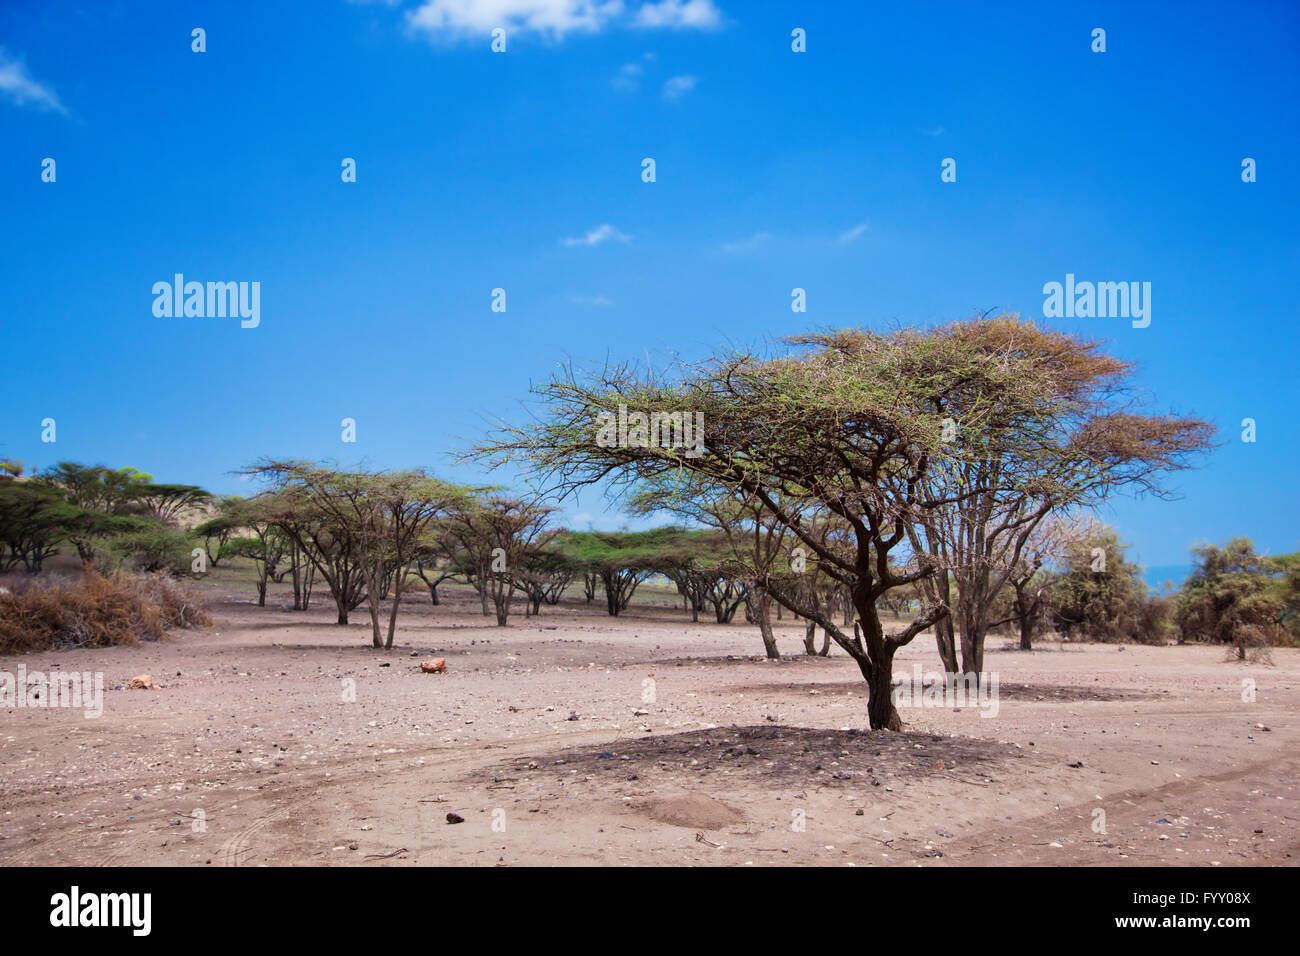 Savannah landscape in Tanzania, Africa Stock Photo